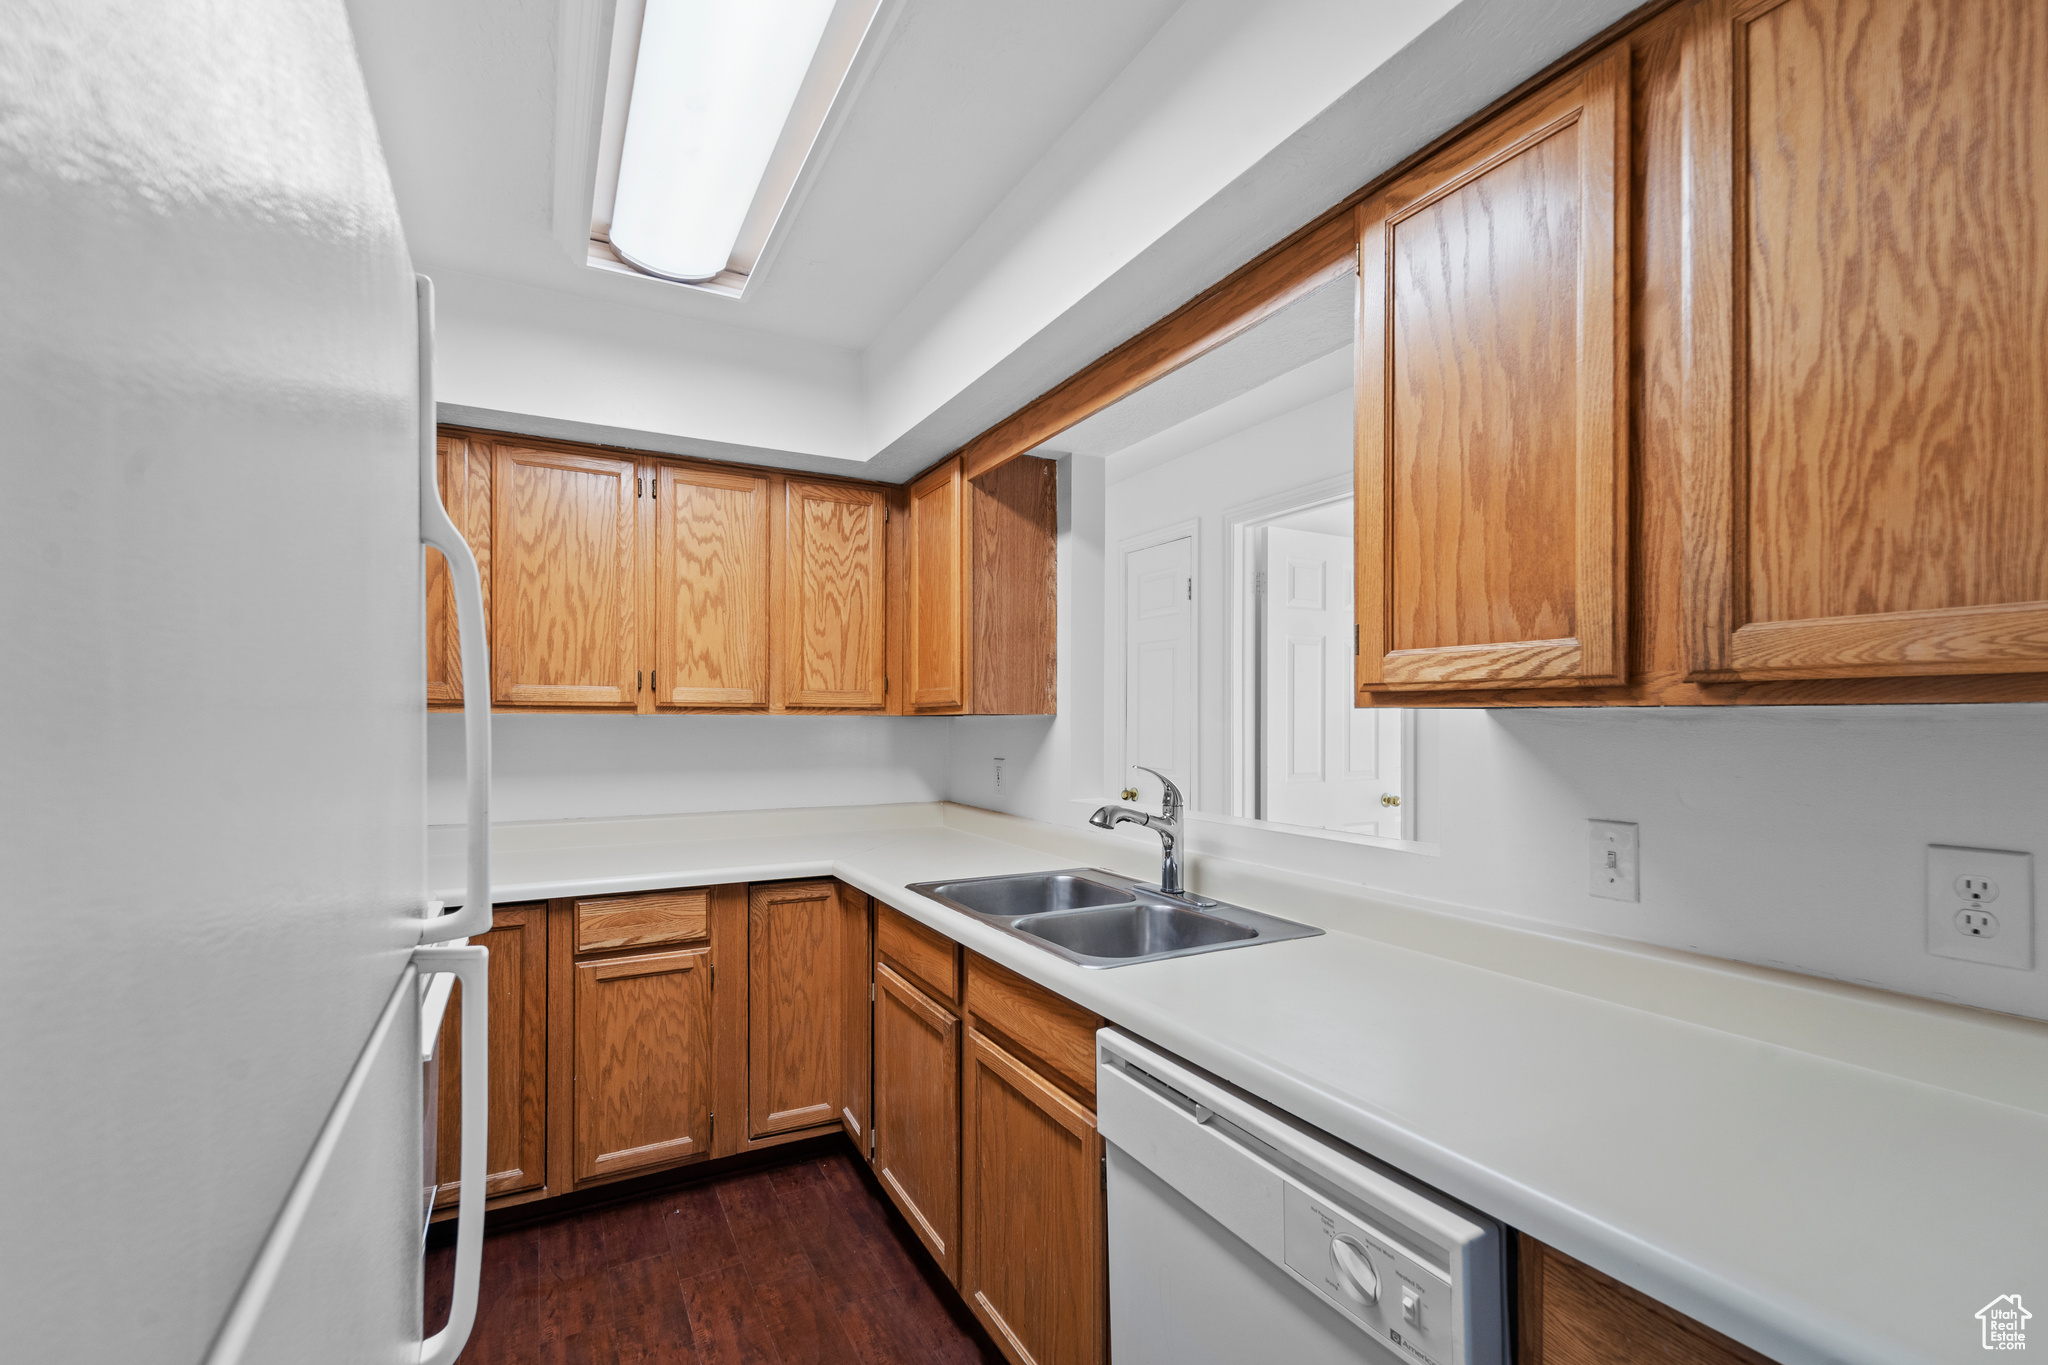 Kitchen with white appliances, dark hardwood-style laminate flooring, and sink